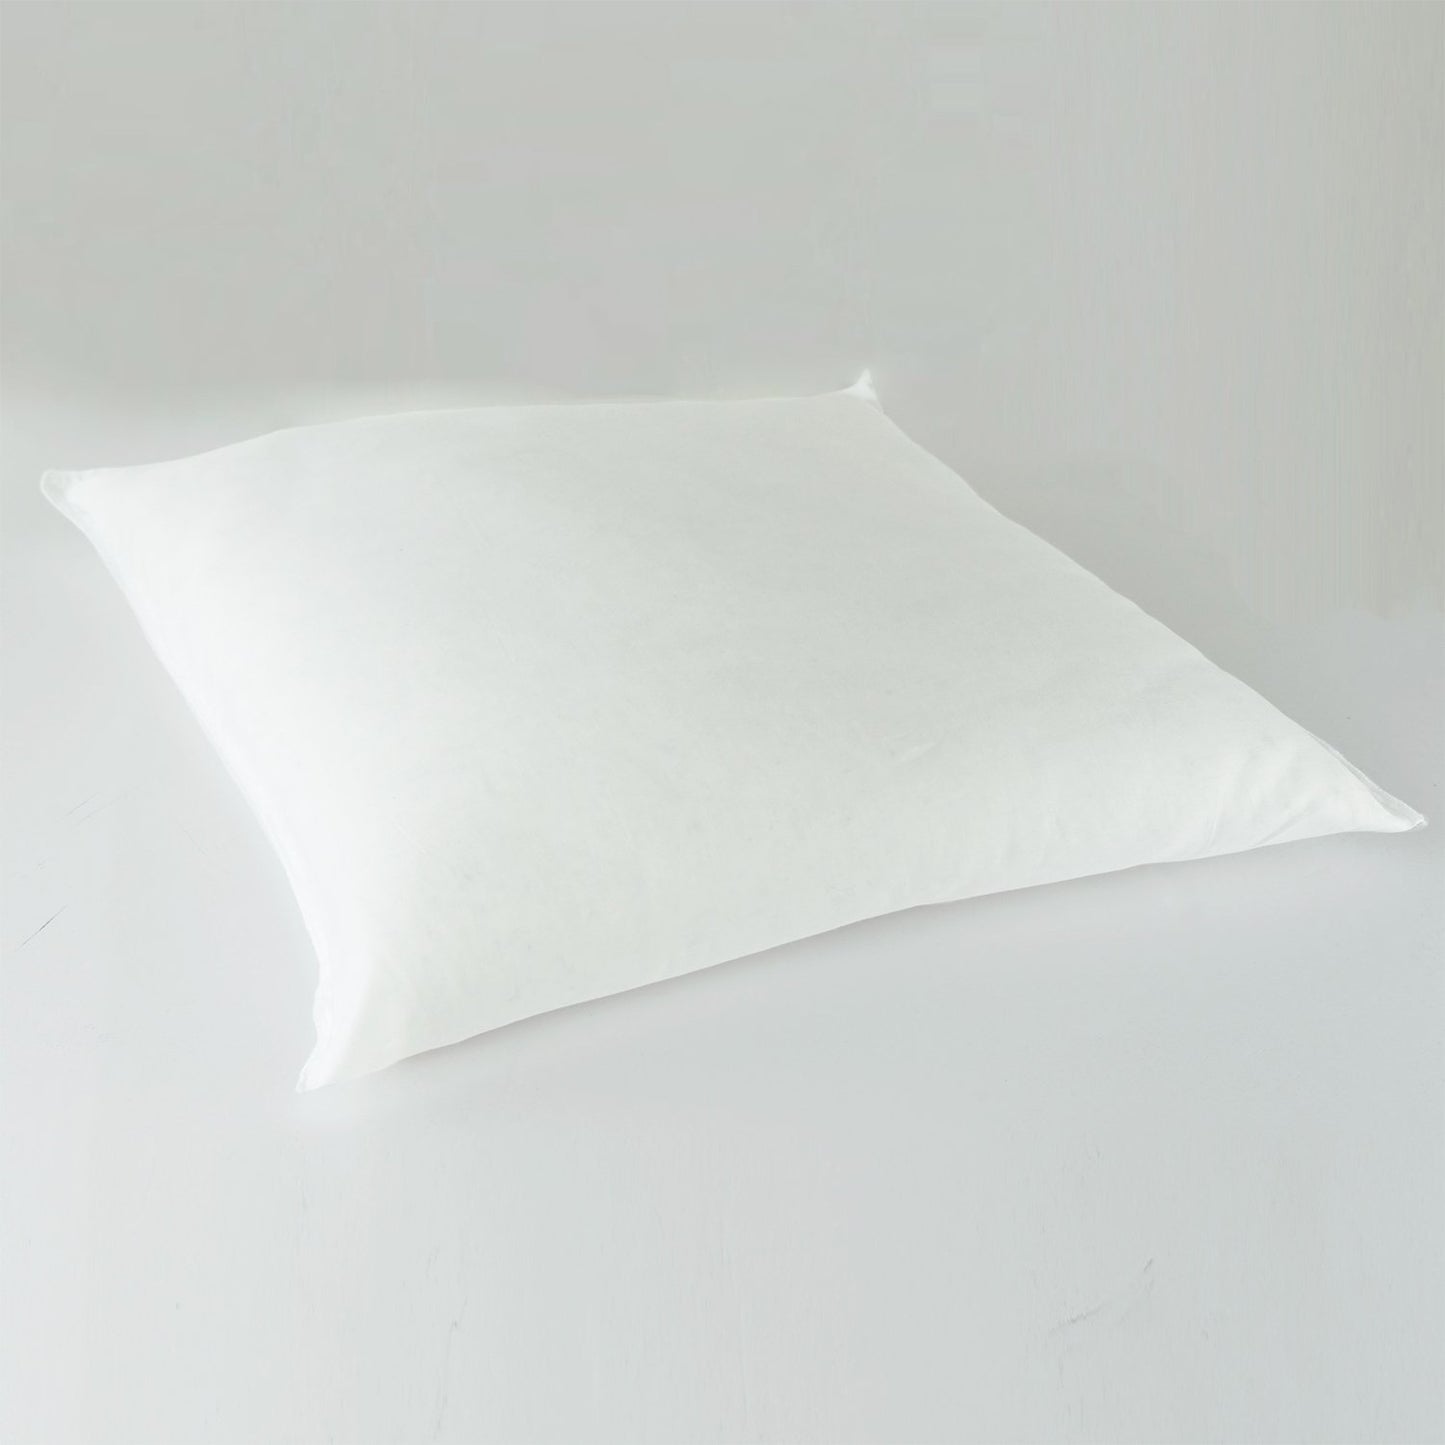 J-Life Nami Black Zabuton Floor Pillow_Pillows & Shams_Zabuton Floor Pillows_100% Cotton_Reversible_Handmade